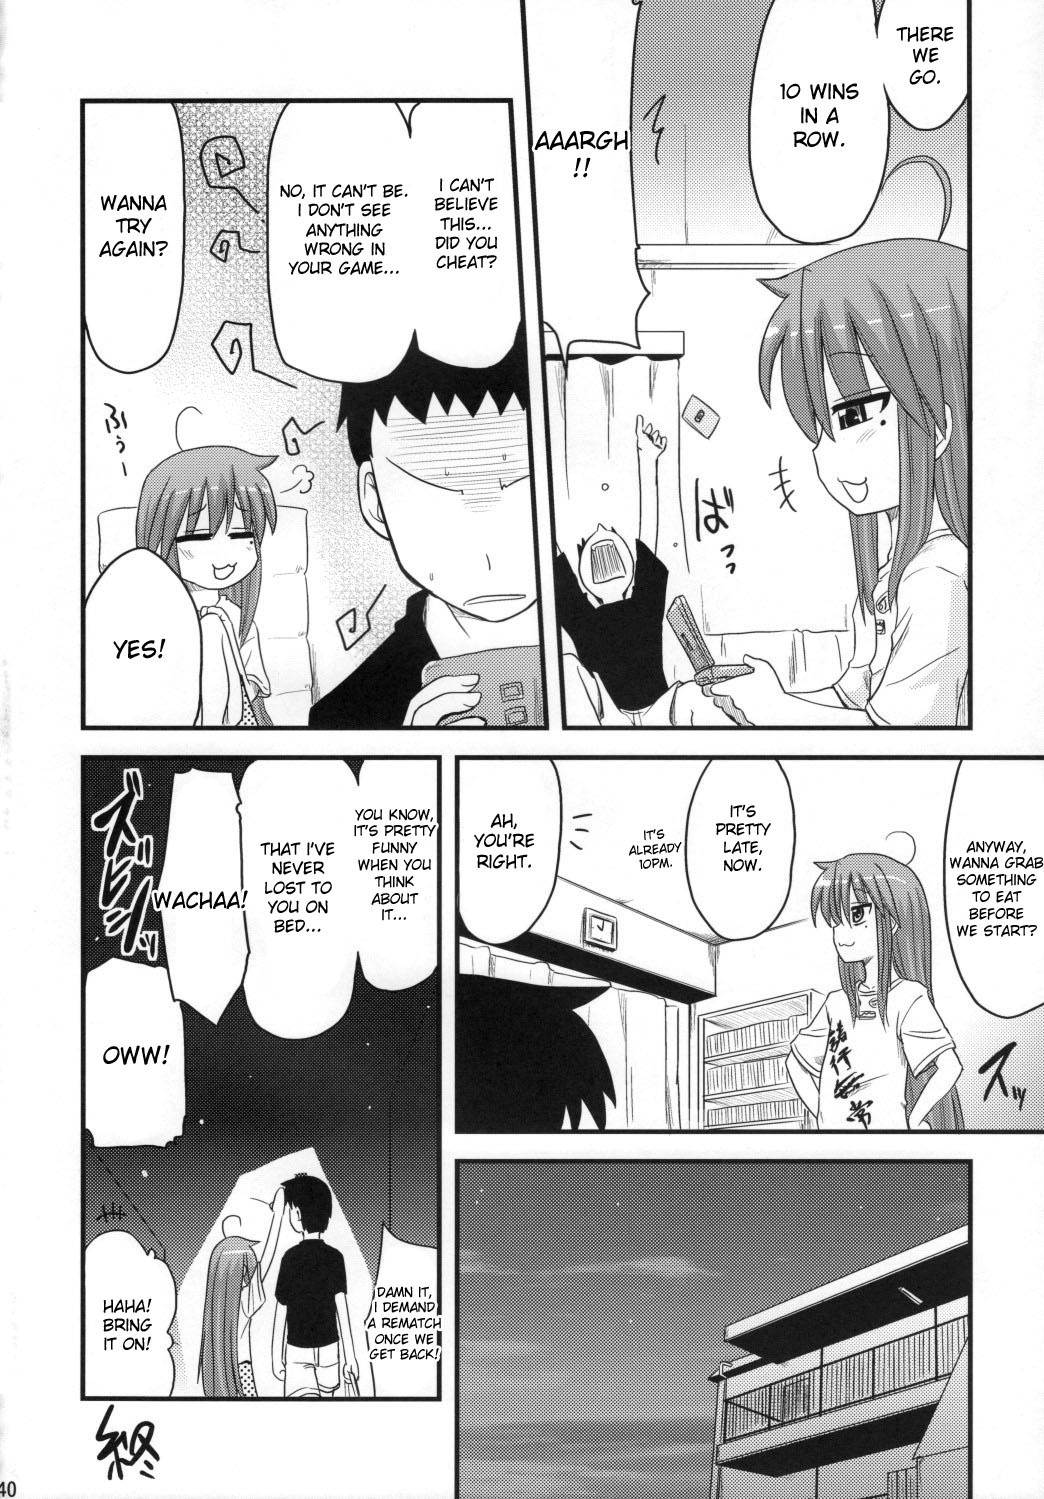 Konata and Oh-zu 4 people each and every one + 1 hentai manga picture 36